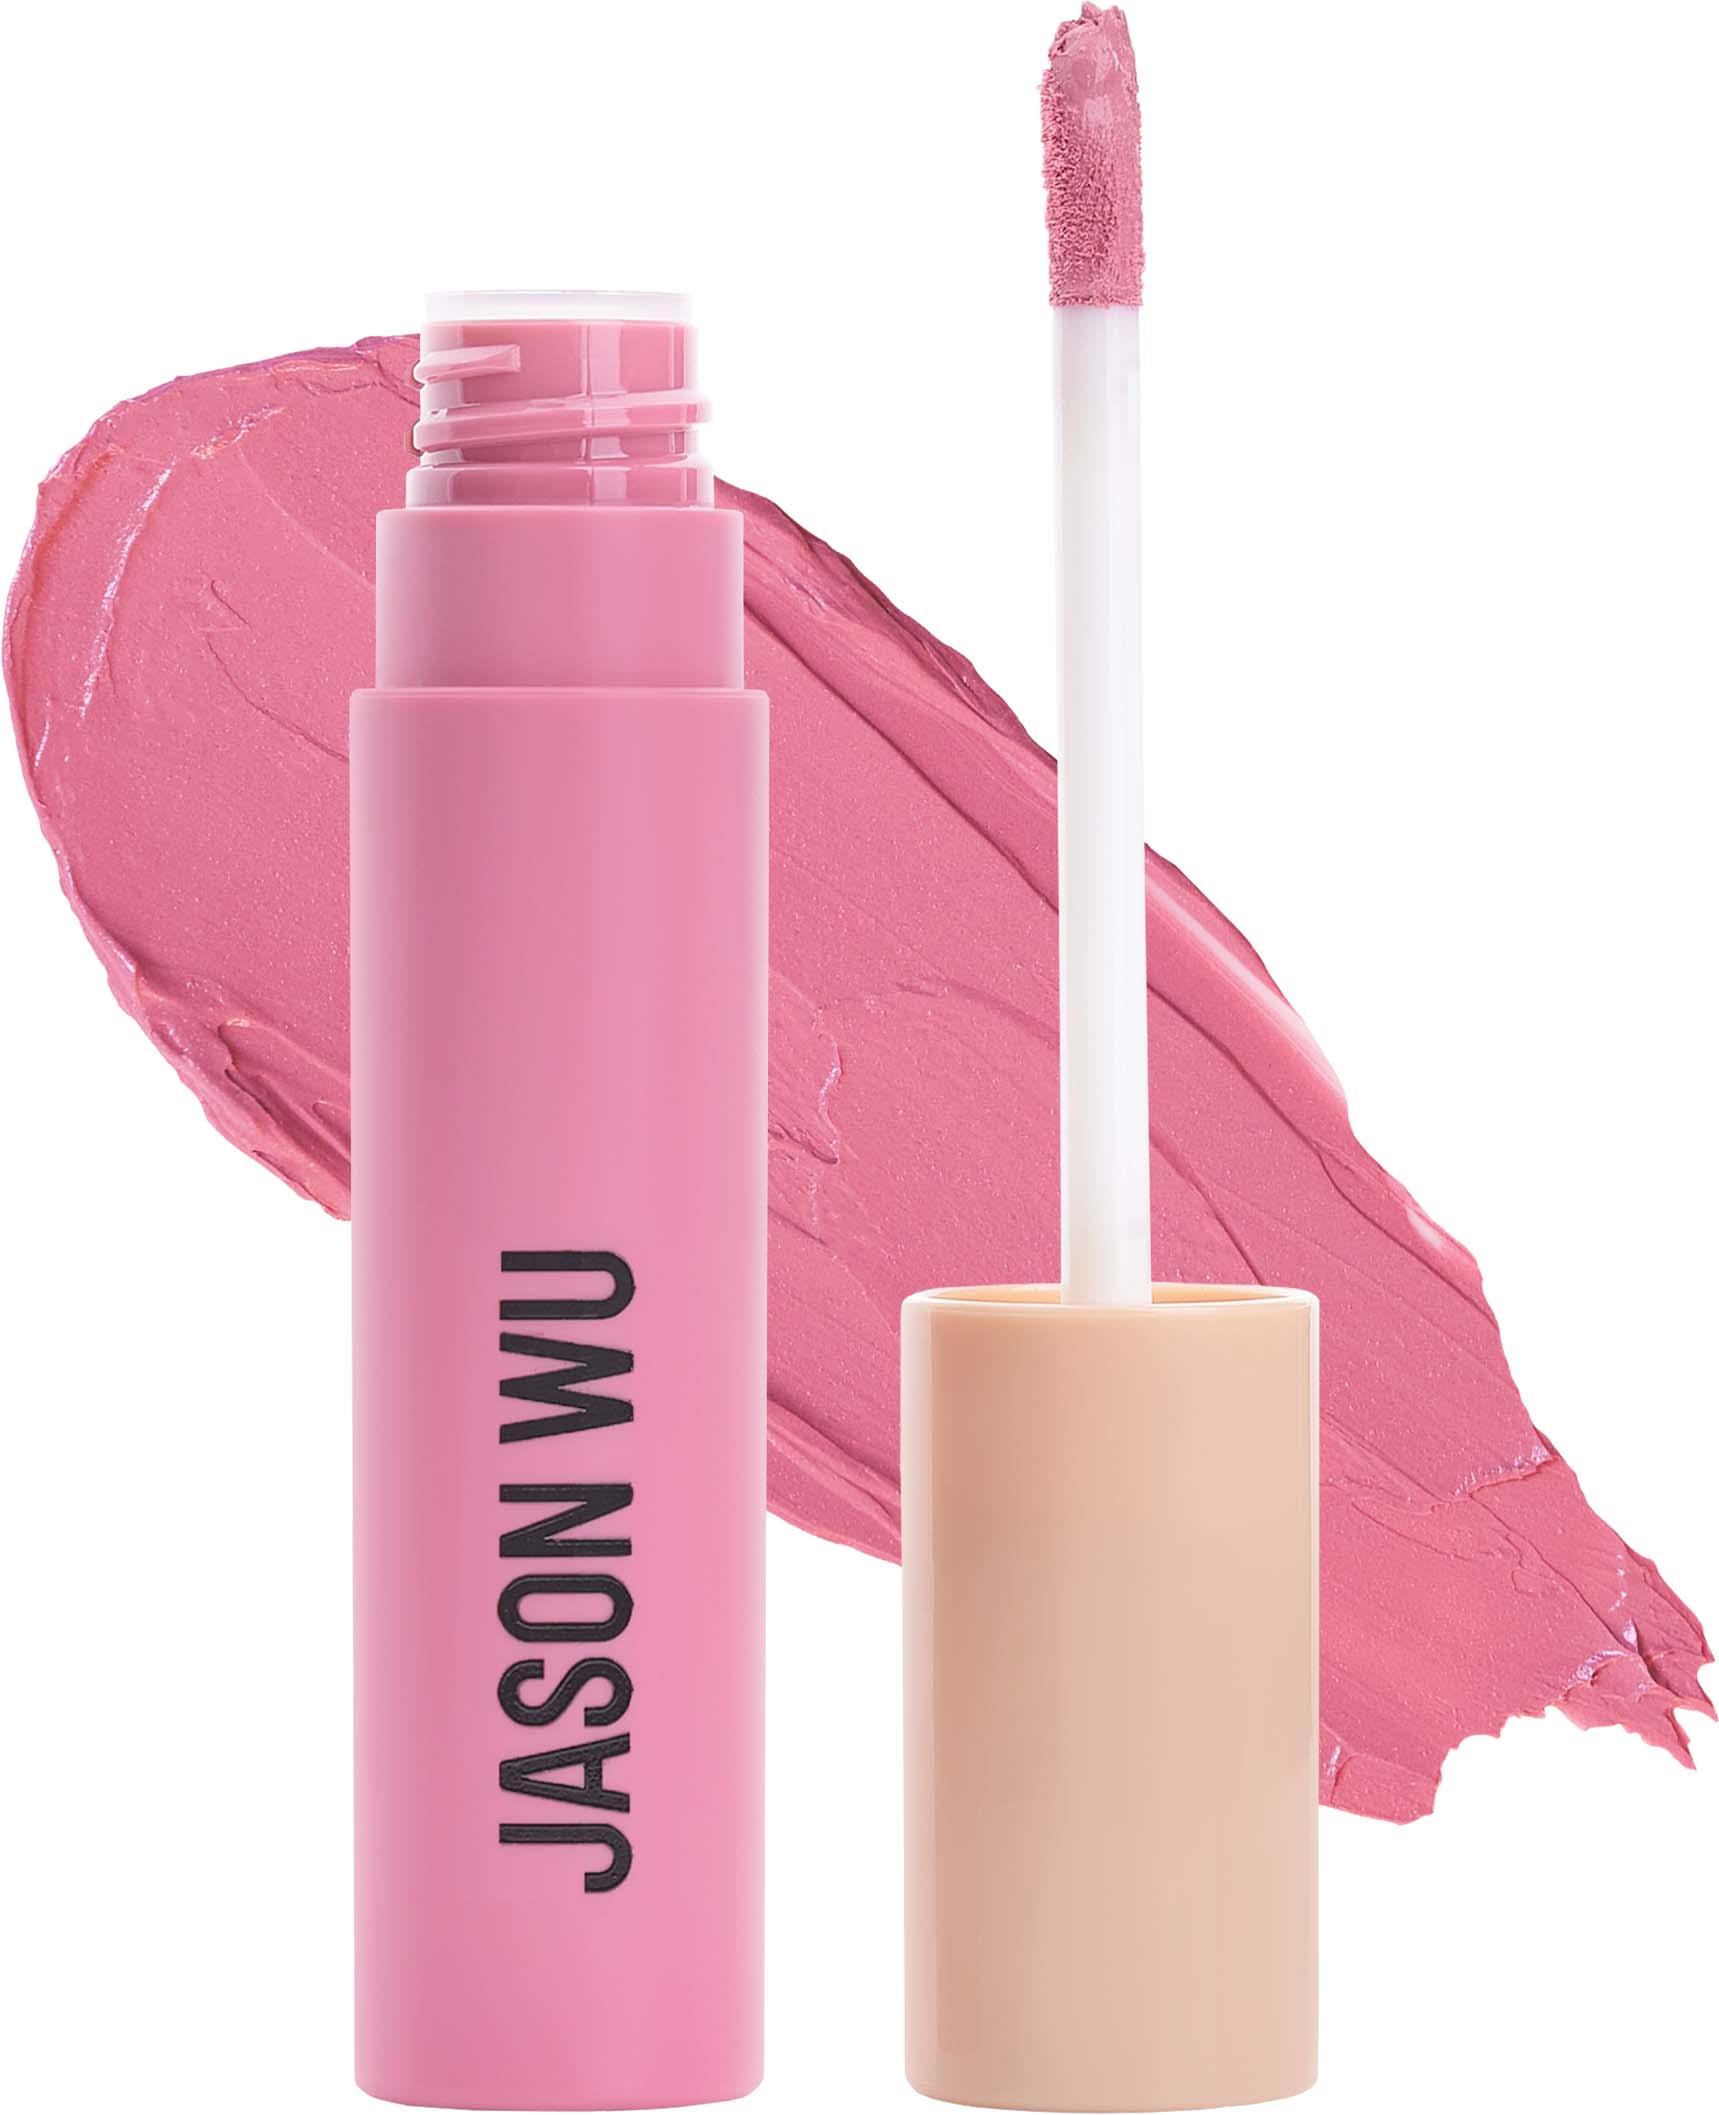 JASON WU BEAUTY Honey Fluff Matte Lip Creme Pink Nude | lyko.com